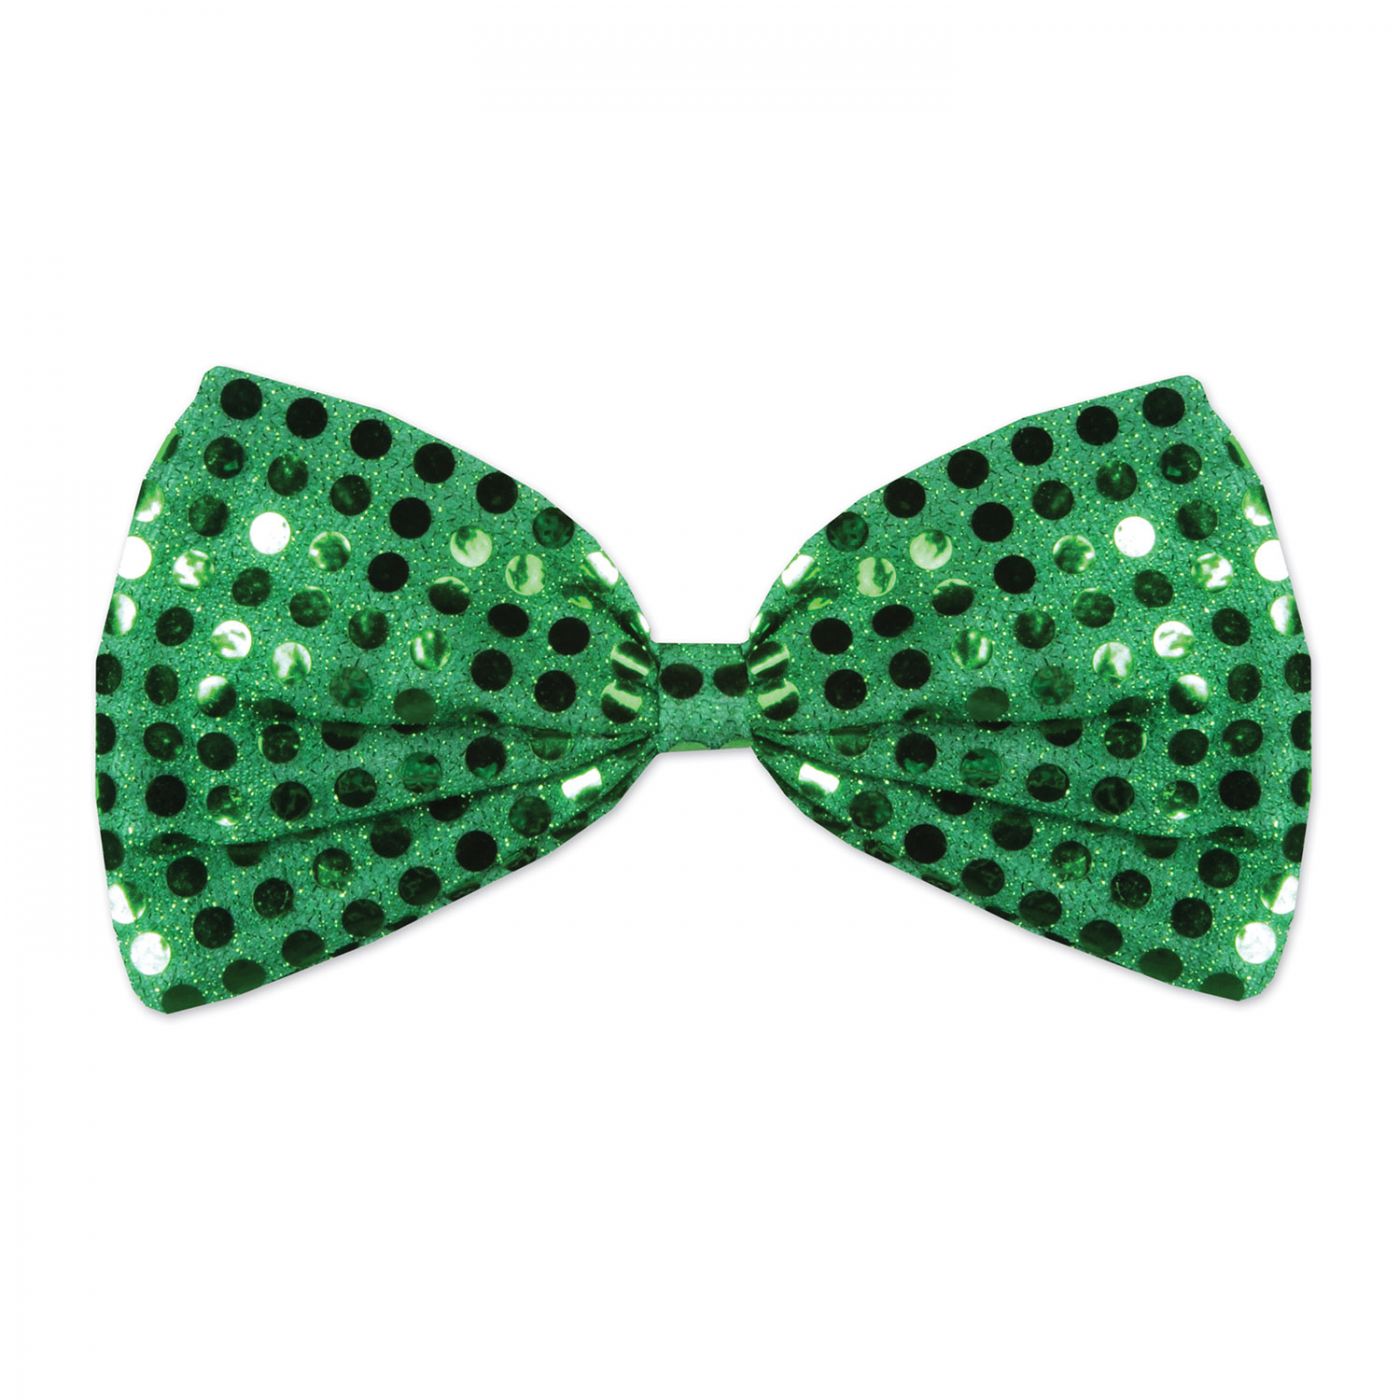 Green Glitz 'N Gleam Bow Tie image